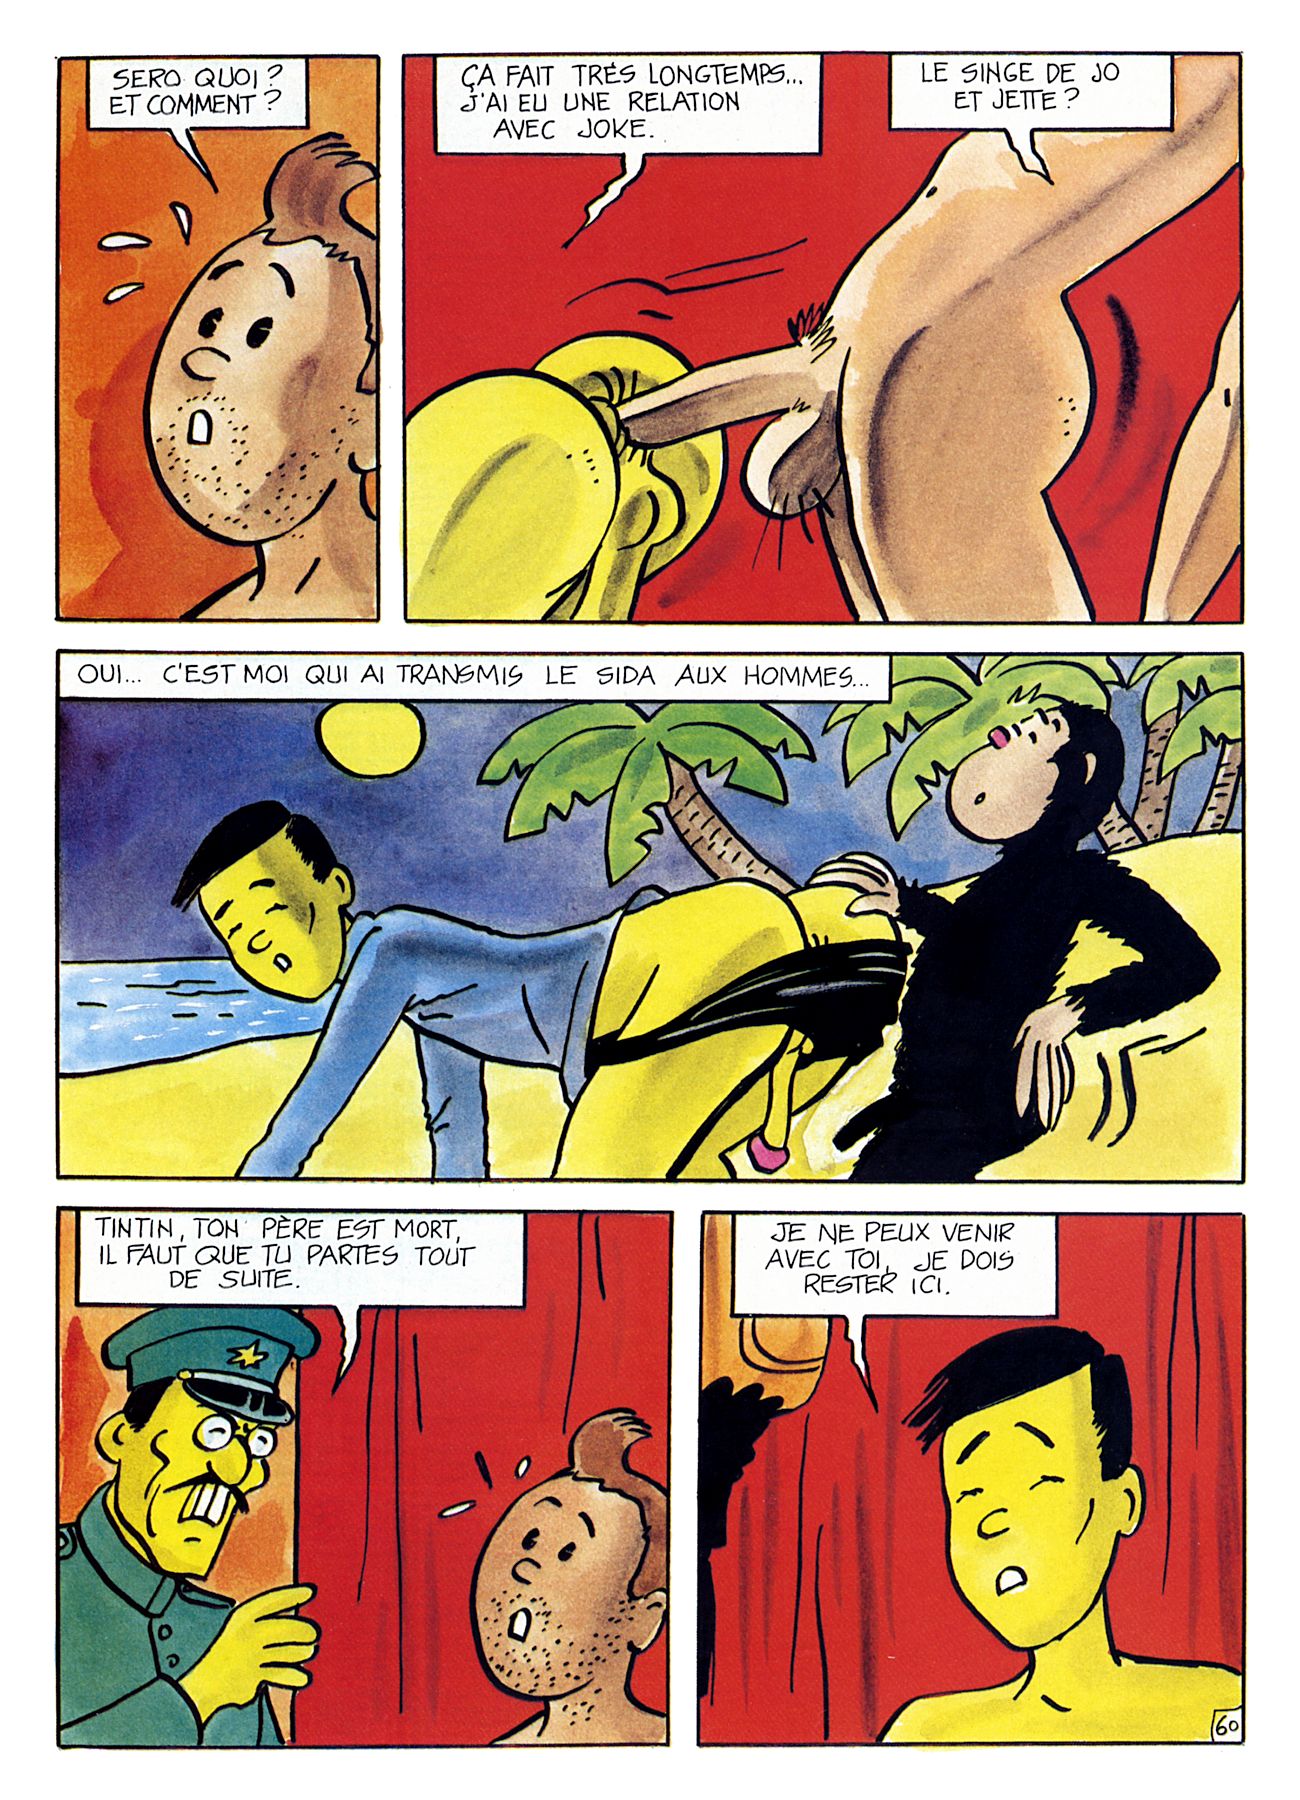 La-Vie-Sexuelle-De-Tintin-1992-All-64-pages-French-page60--Gotofap.tk--44090959.jpg